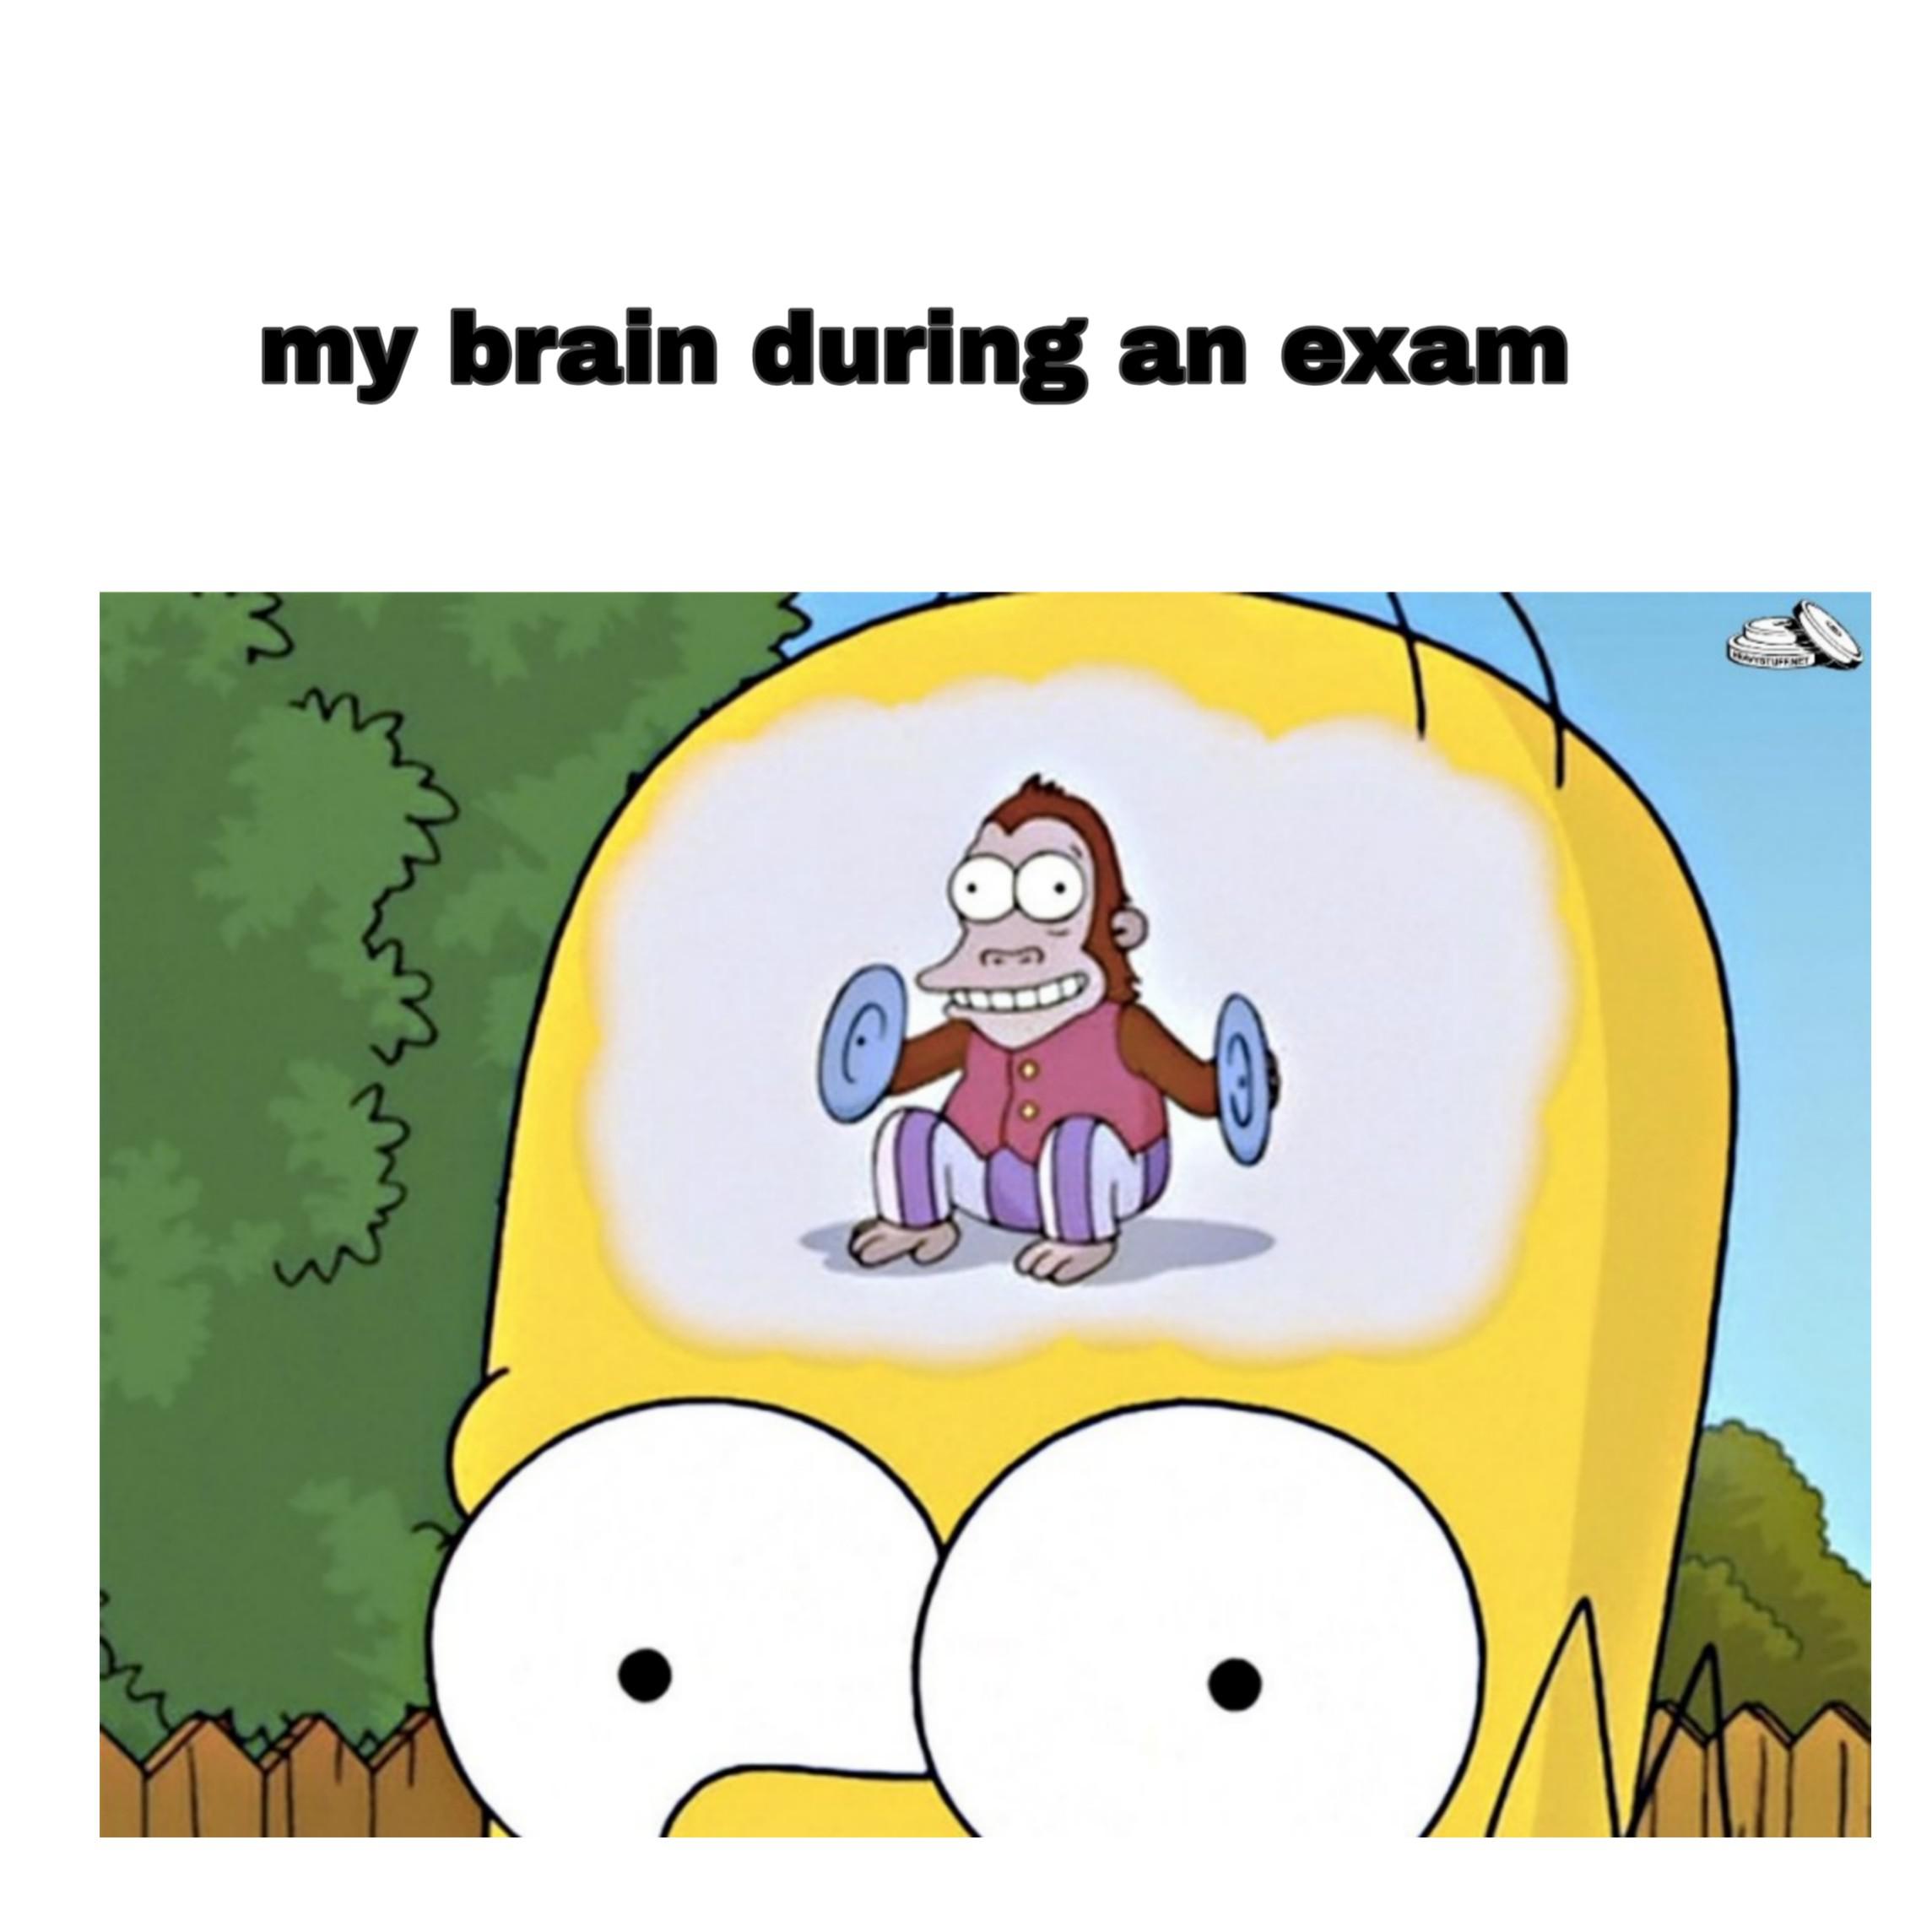 college dank memes - simpsons monkey cymbals - my brain during an exam 3 Listusene wo